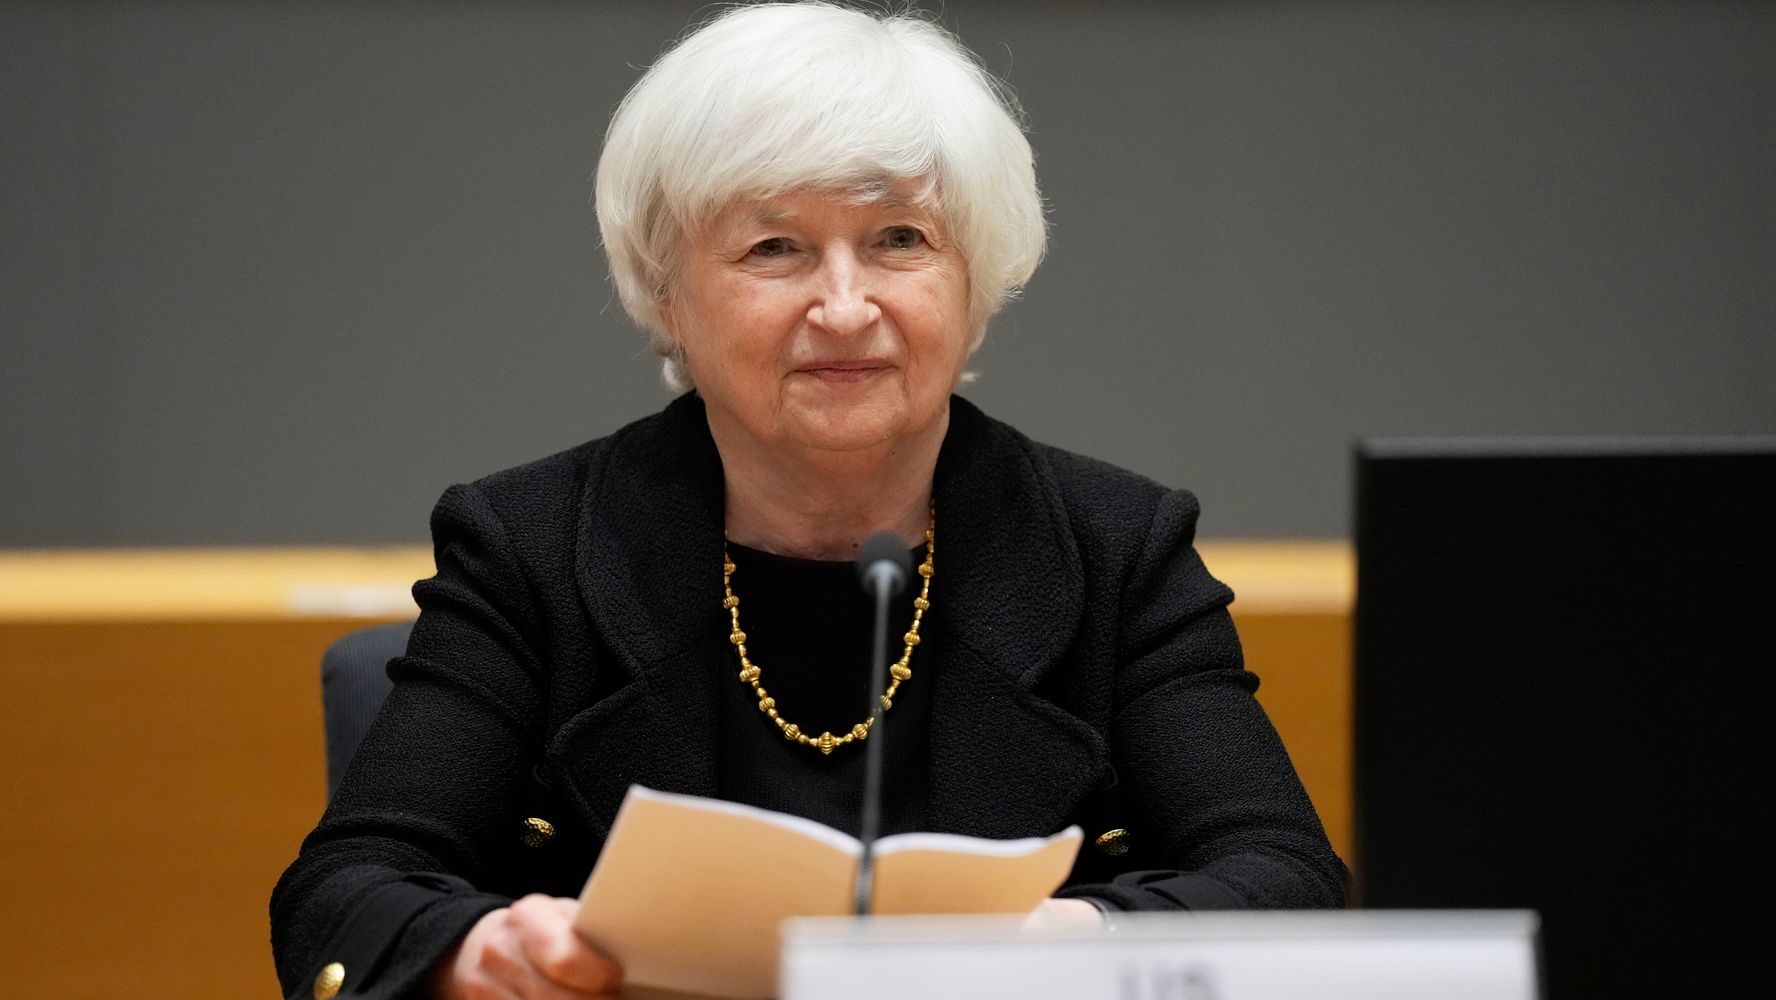 Janet Yellen: Oct. 18 Likely Date When U.S. Debt Measures Exhausted